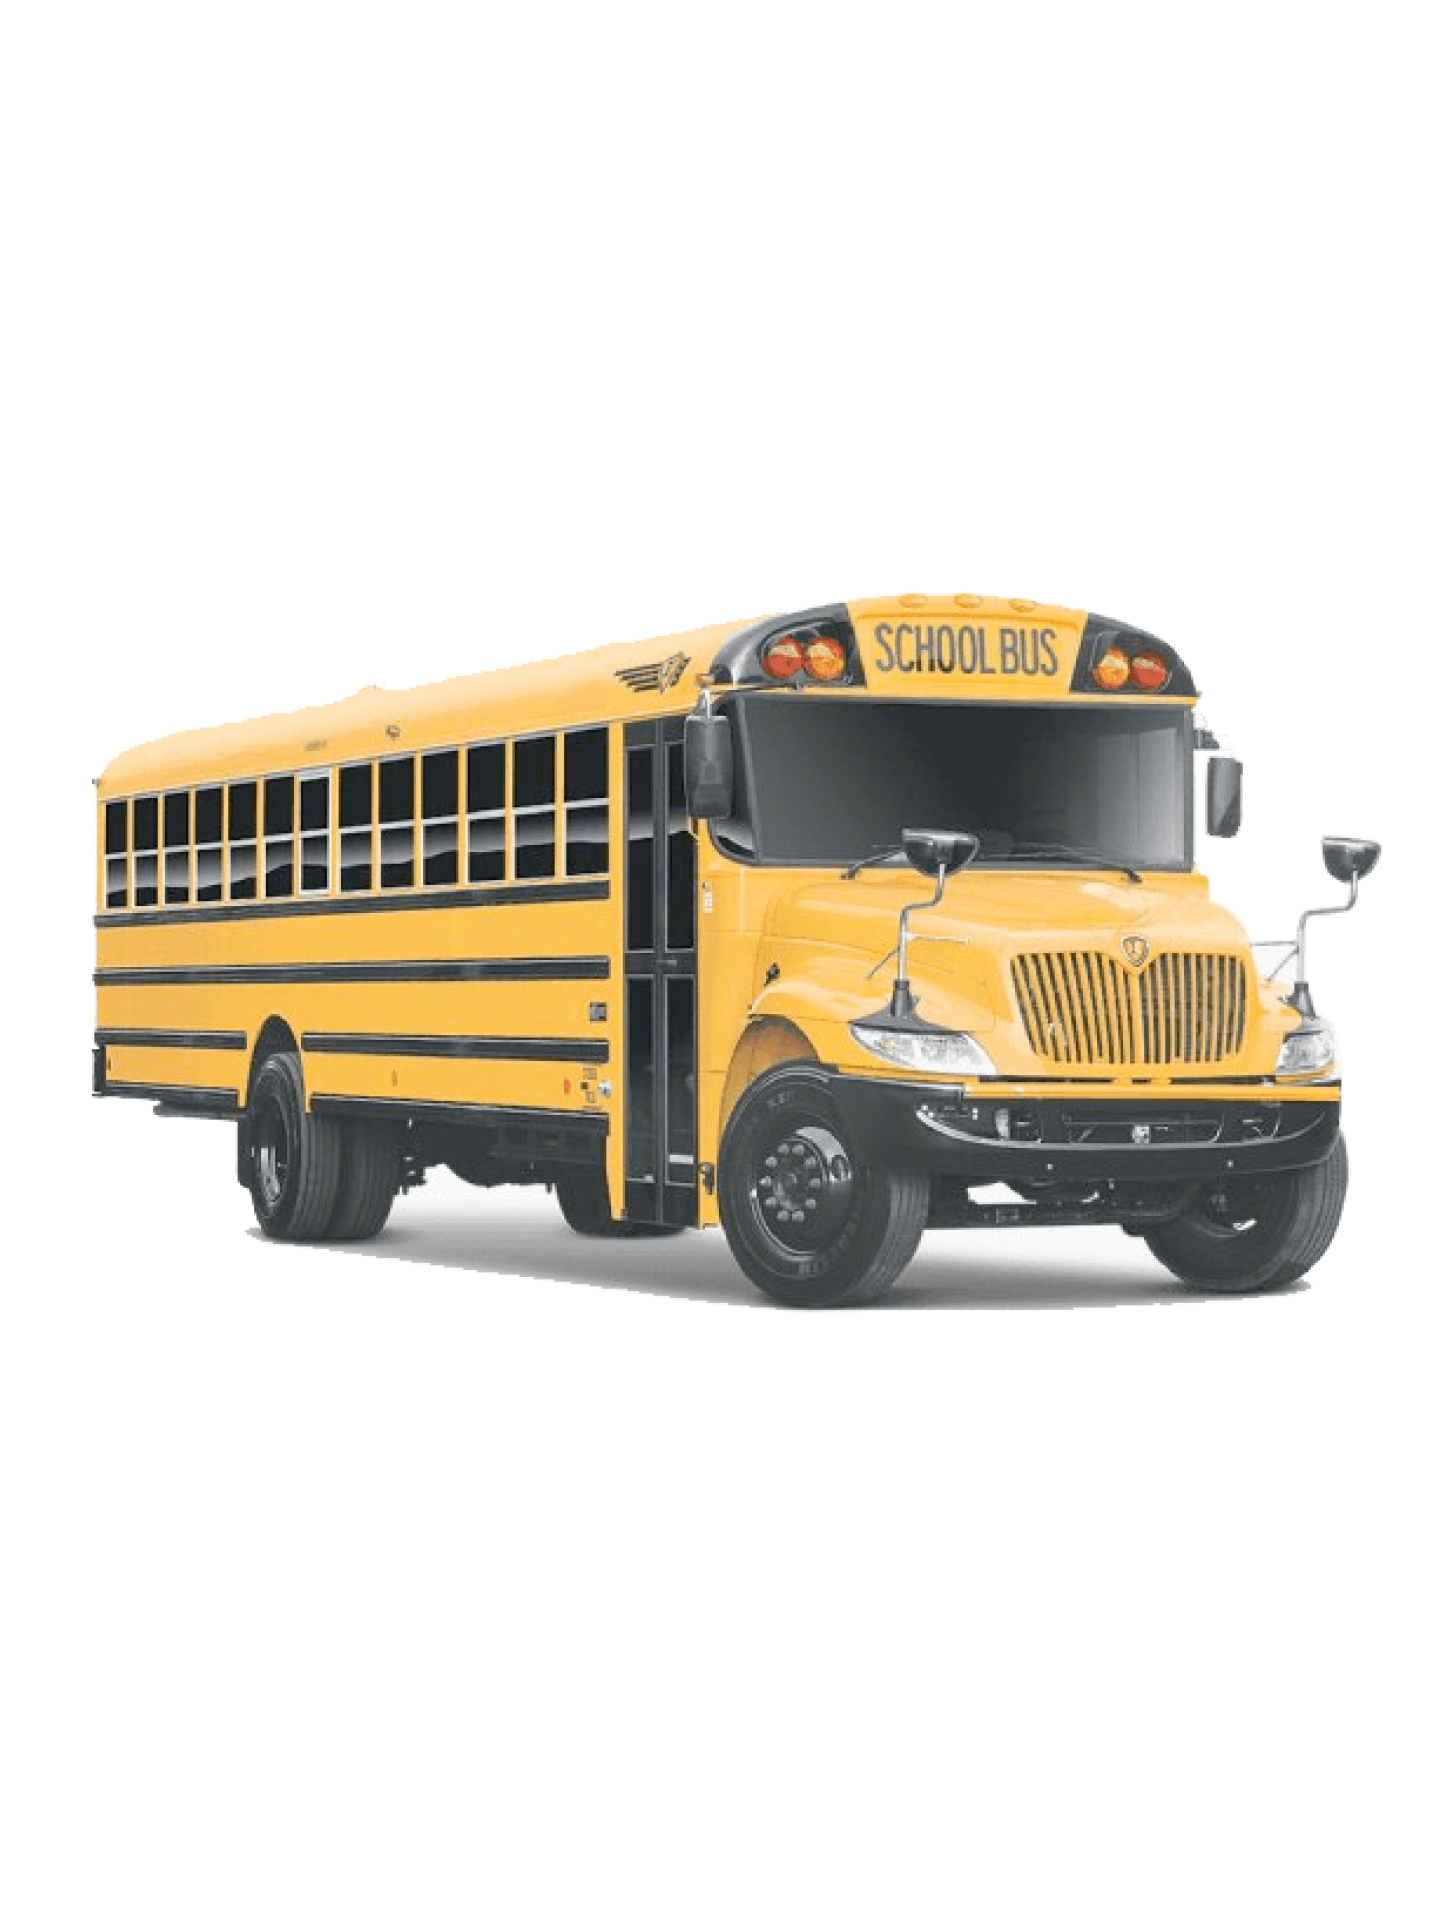 coach bus school trip